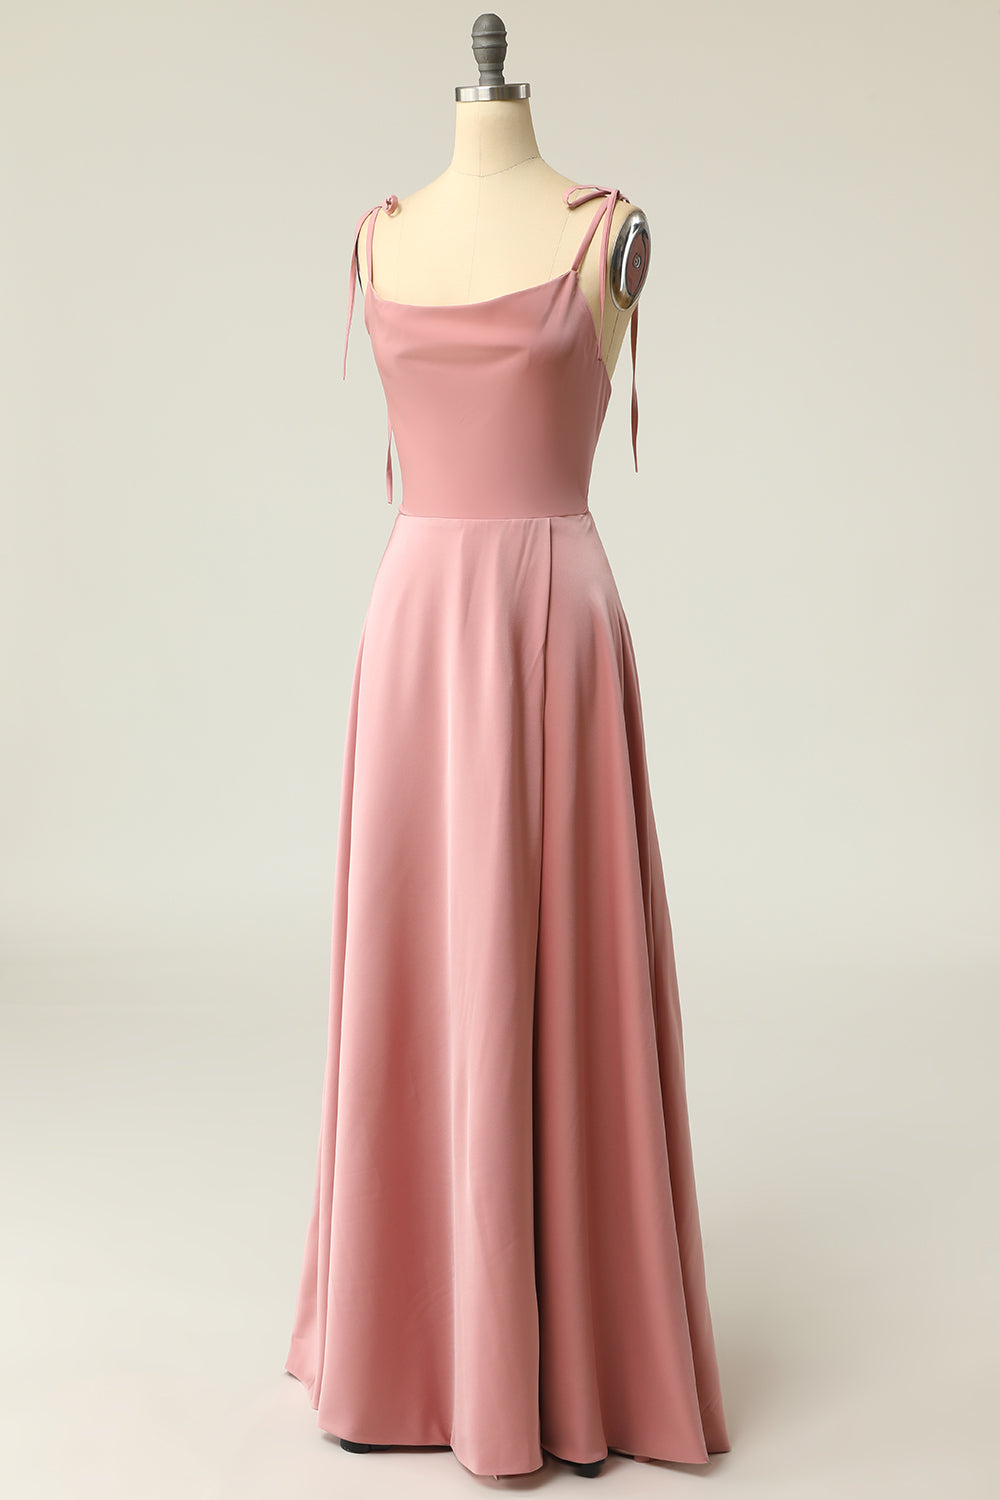 Blush Spaghetti Straps Long Prom Dress with Bowknot